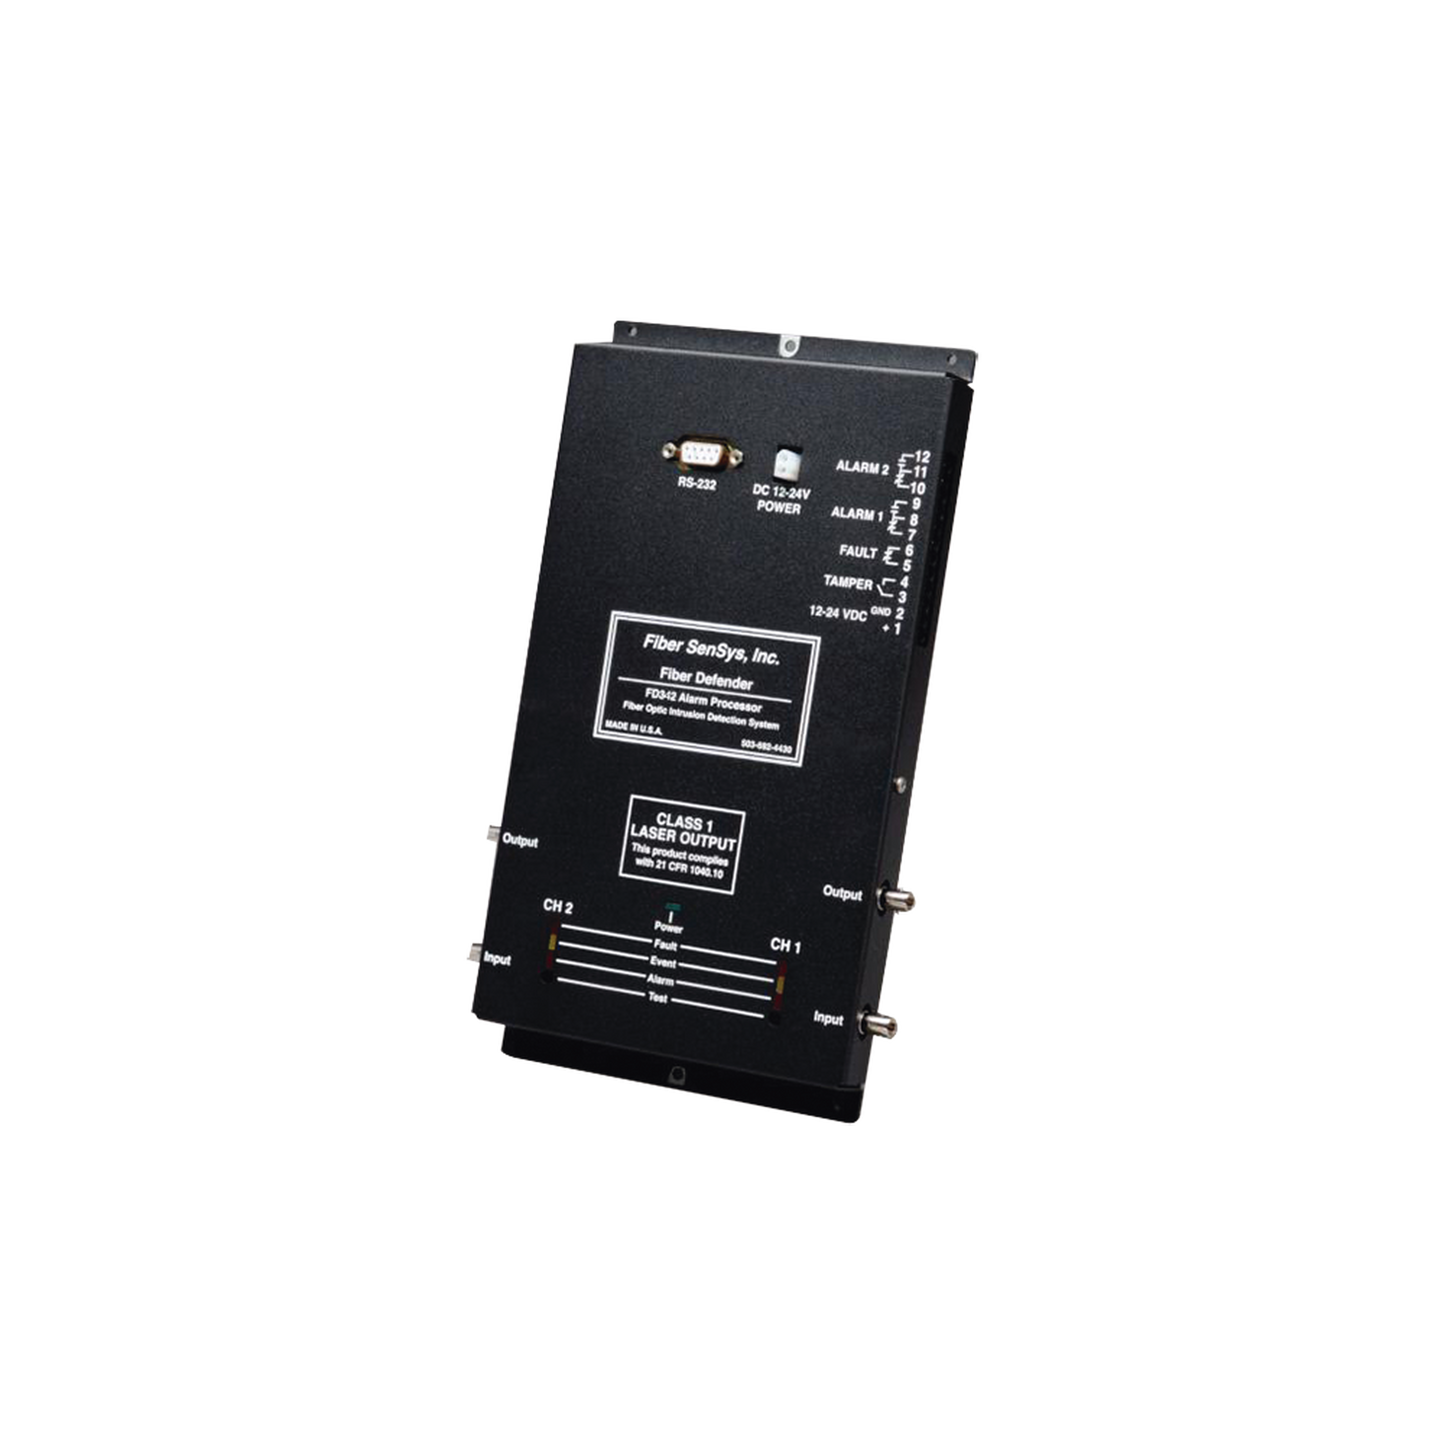 Sensor de Seguridad Perimetral de 1 Zona/Detección por Fibra Óptica Sensitiva / 0 a 5 Km de protección/ Hasta 20 Km de fibra insensitiva/ Comunicación IP